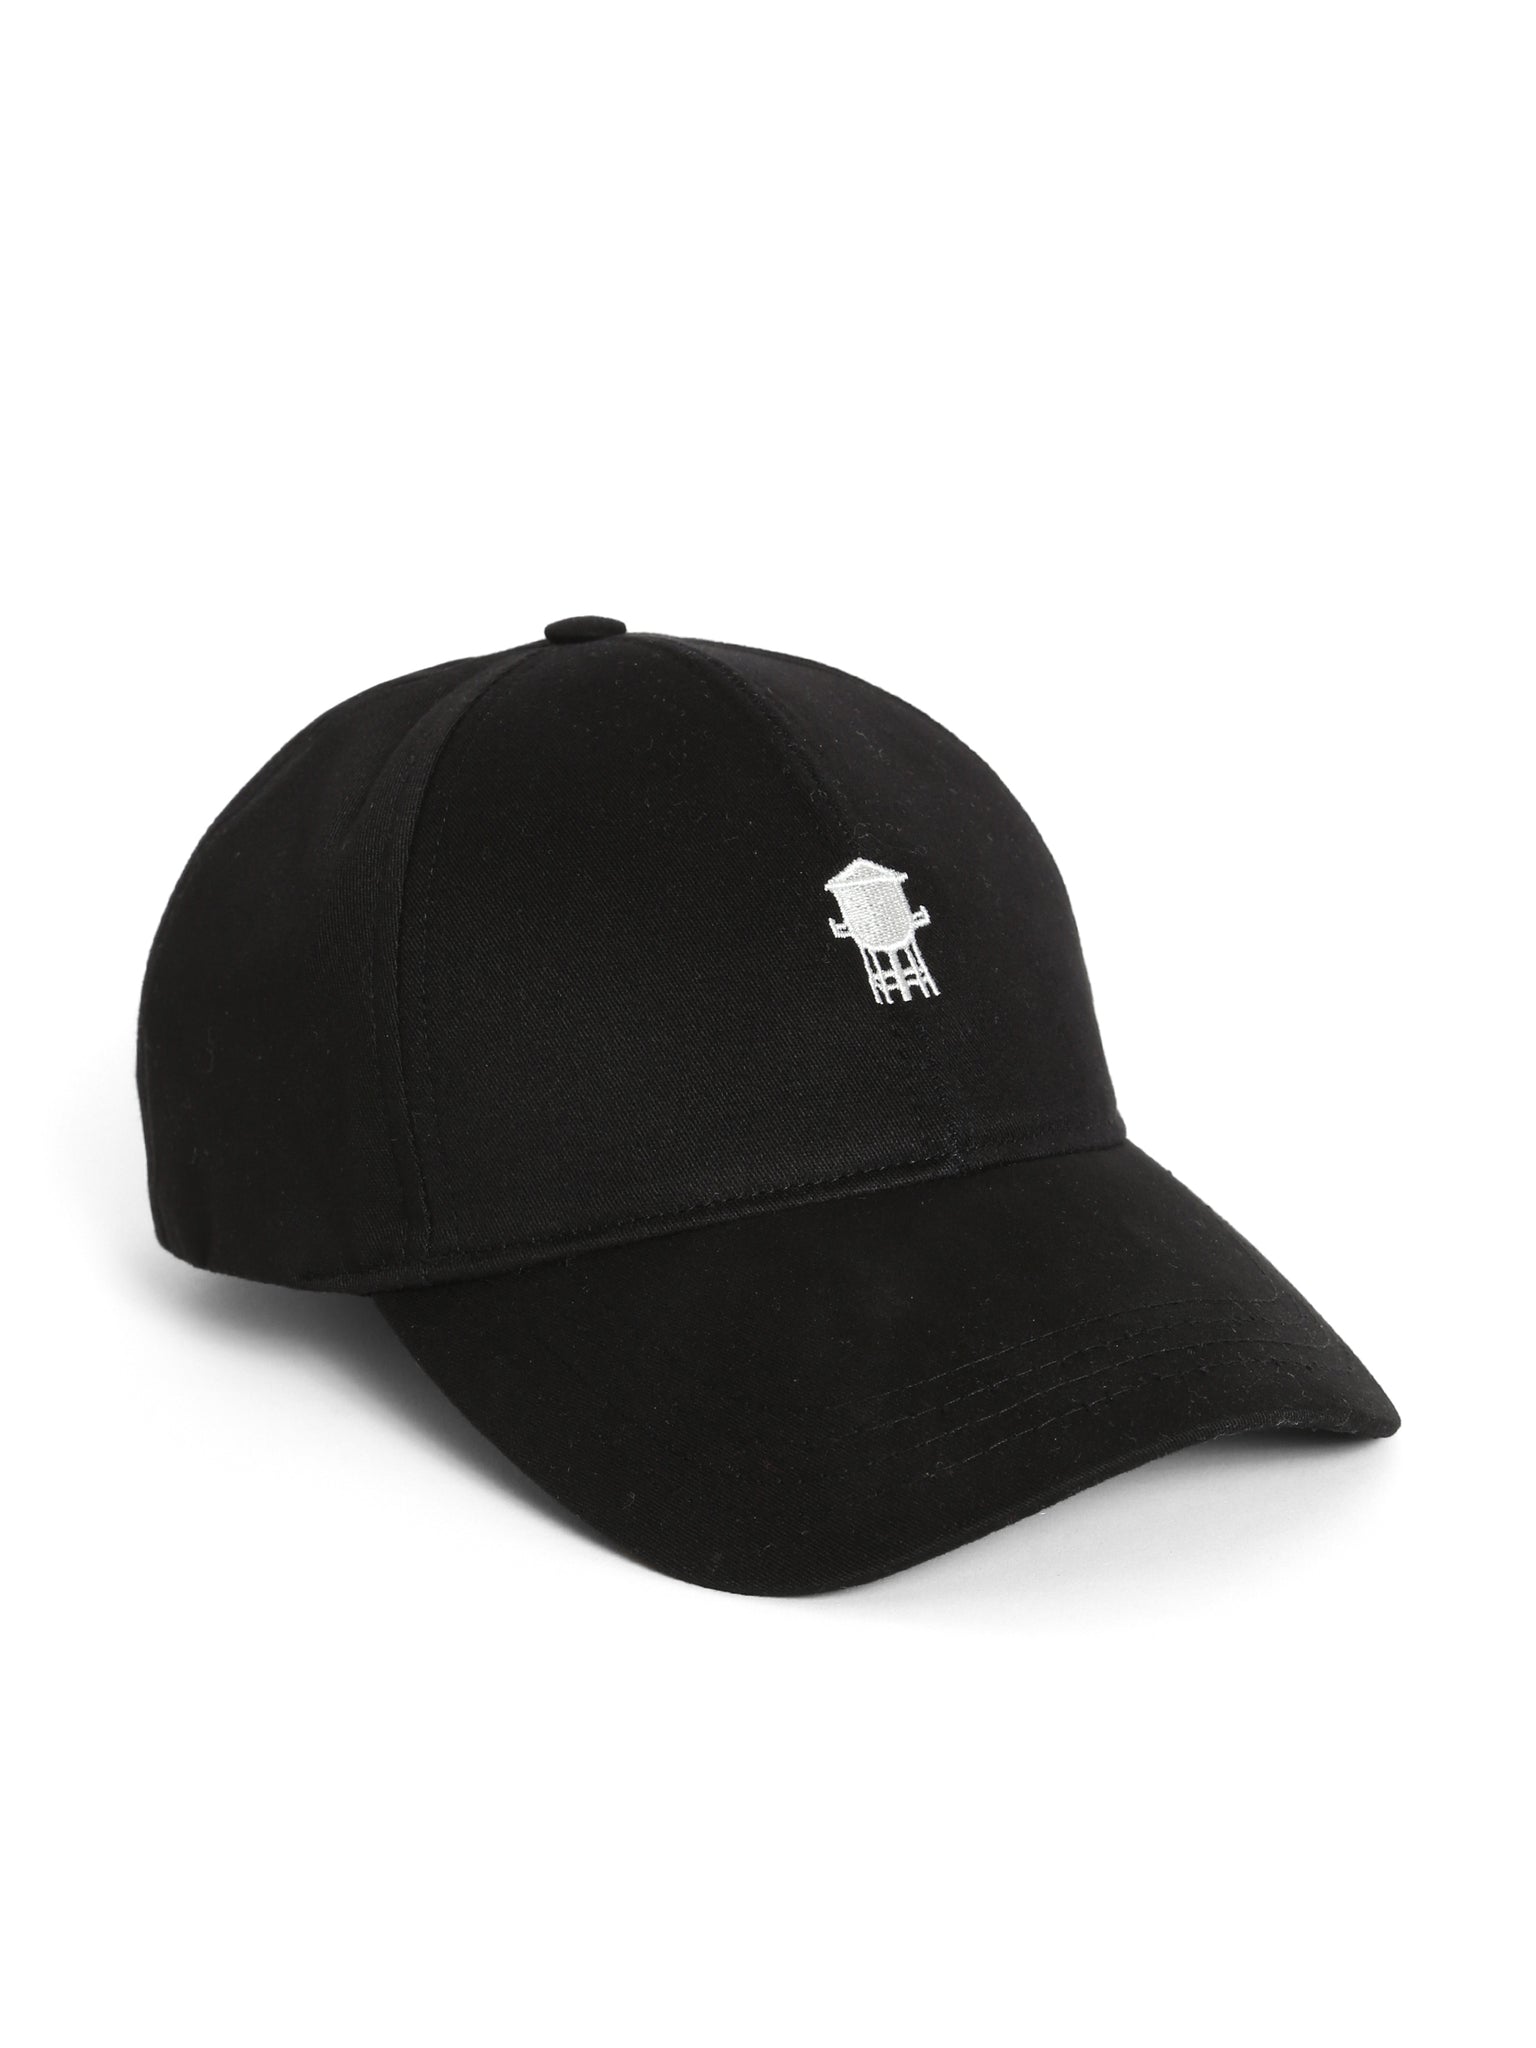 Water Tower Baseball Cap | Unisex Hats | Brooklyn Industries